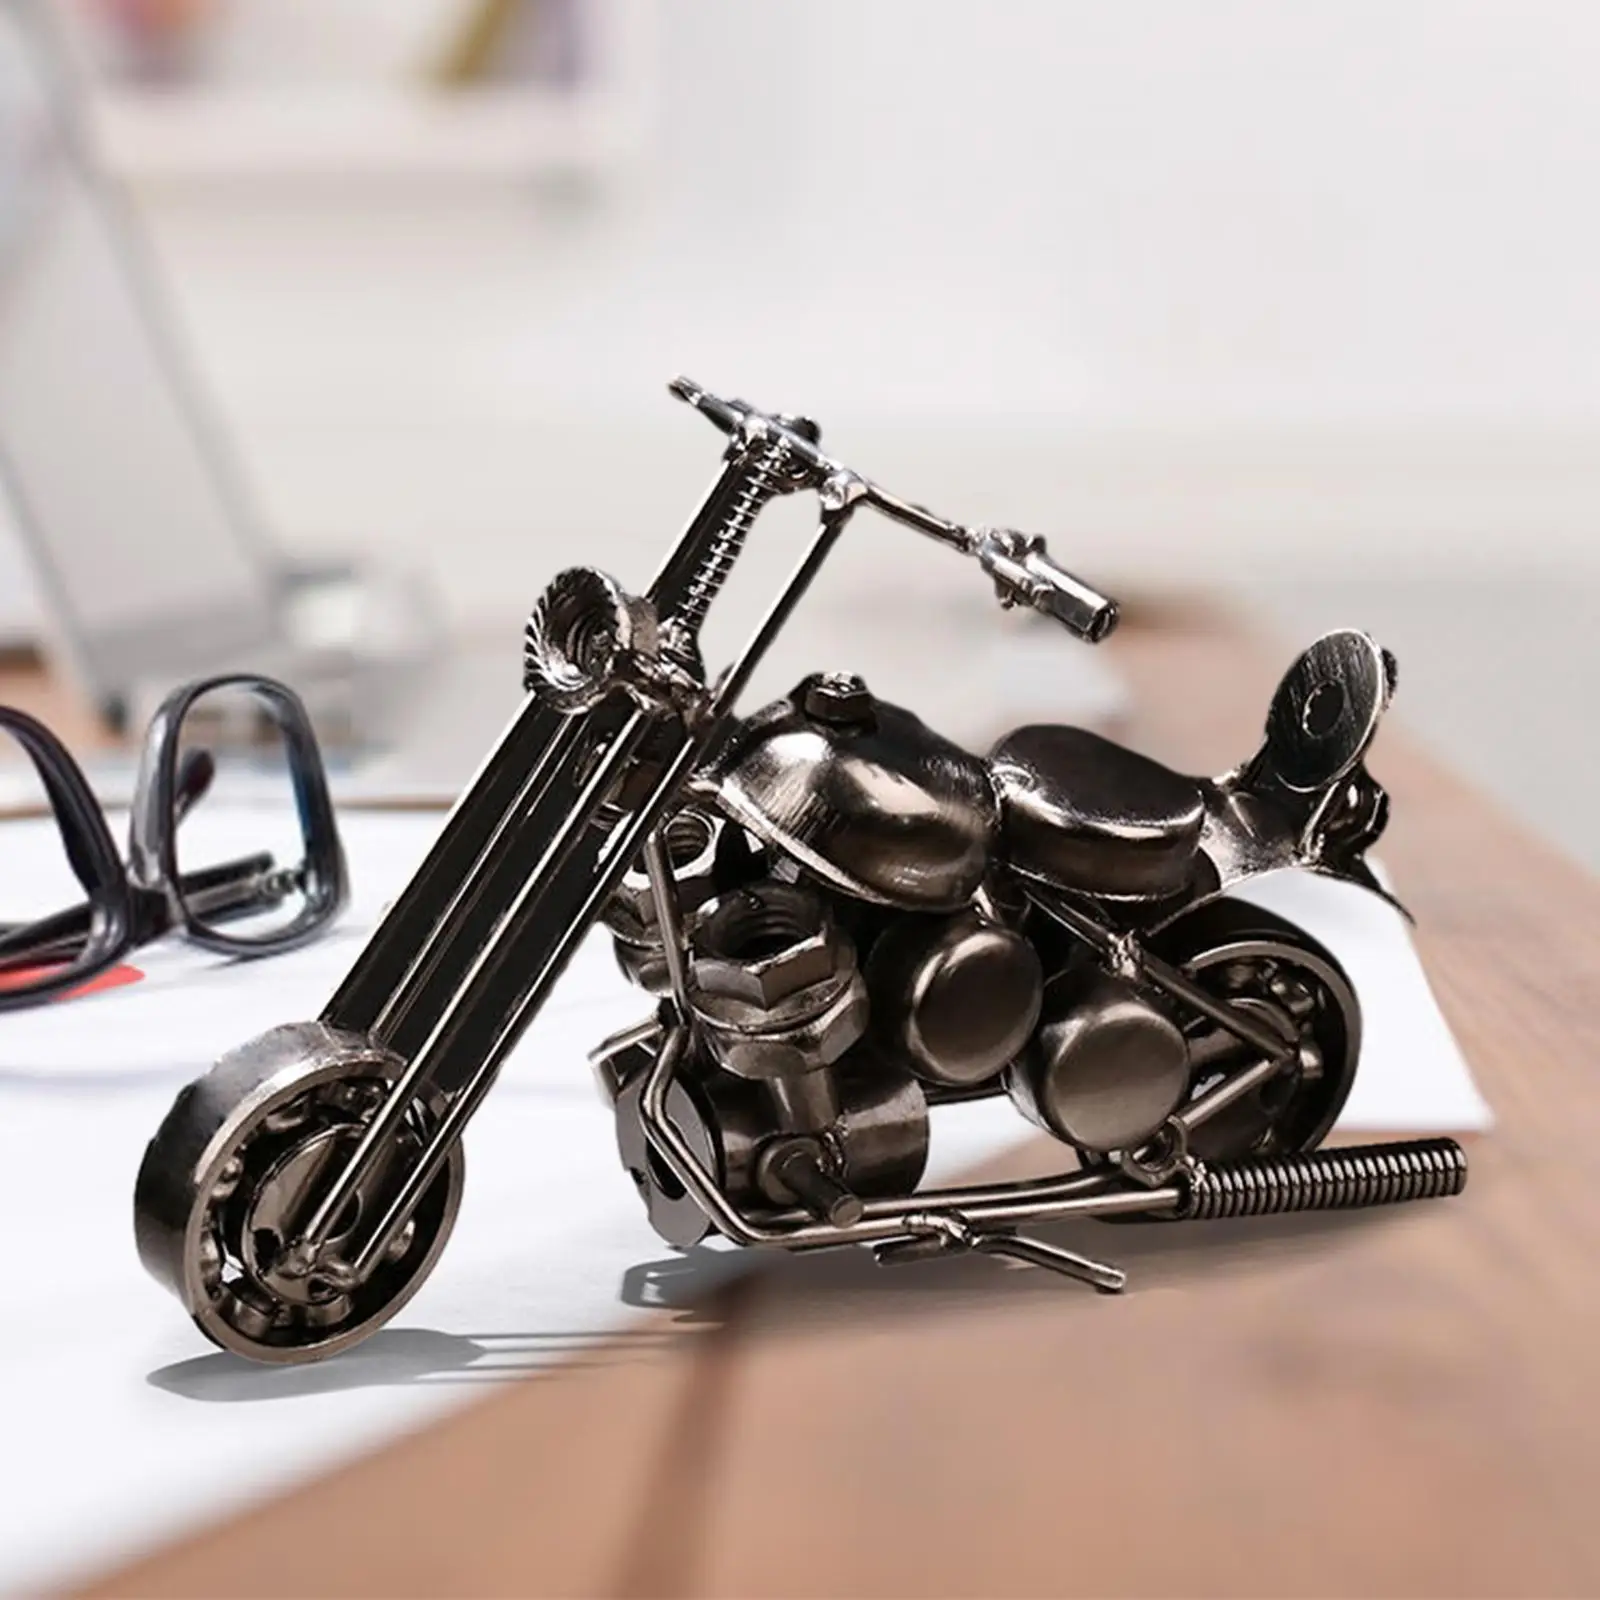 Motorcycle Model Motorcycle Sculpture Photo Props Birthday Gift Accessories Ornament for Office Bookshelf Home Desktop Boyfriend